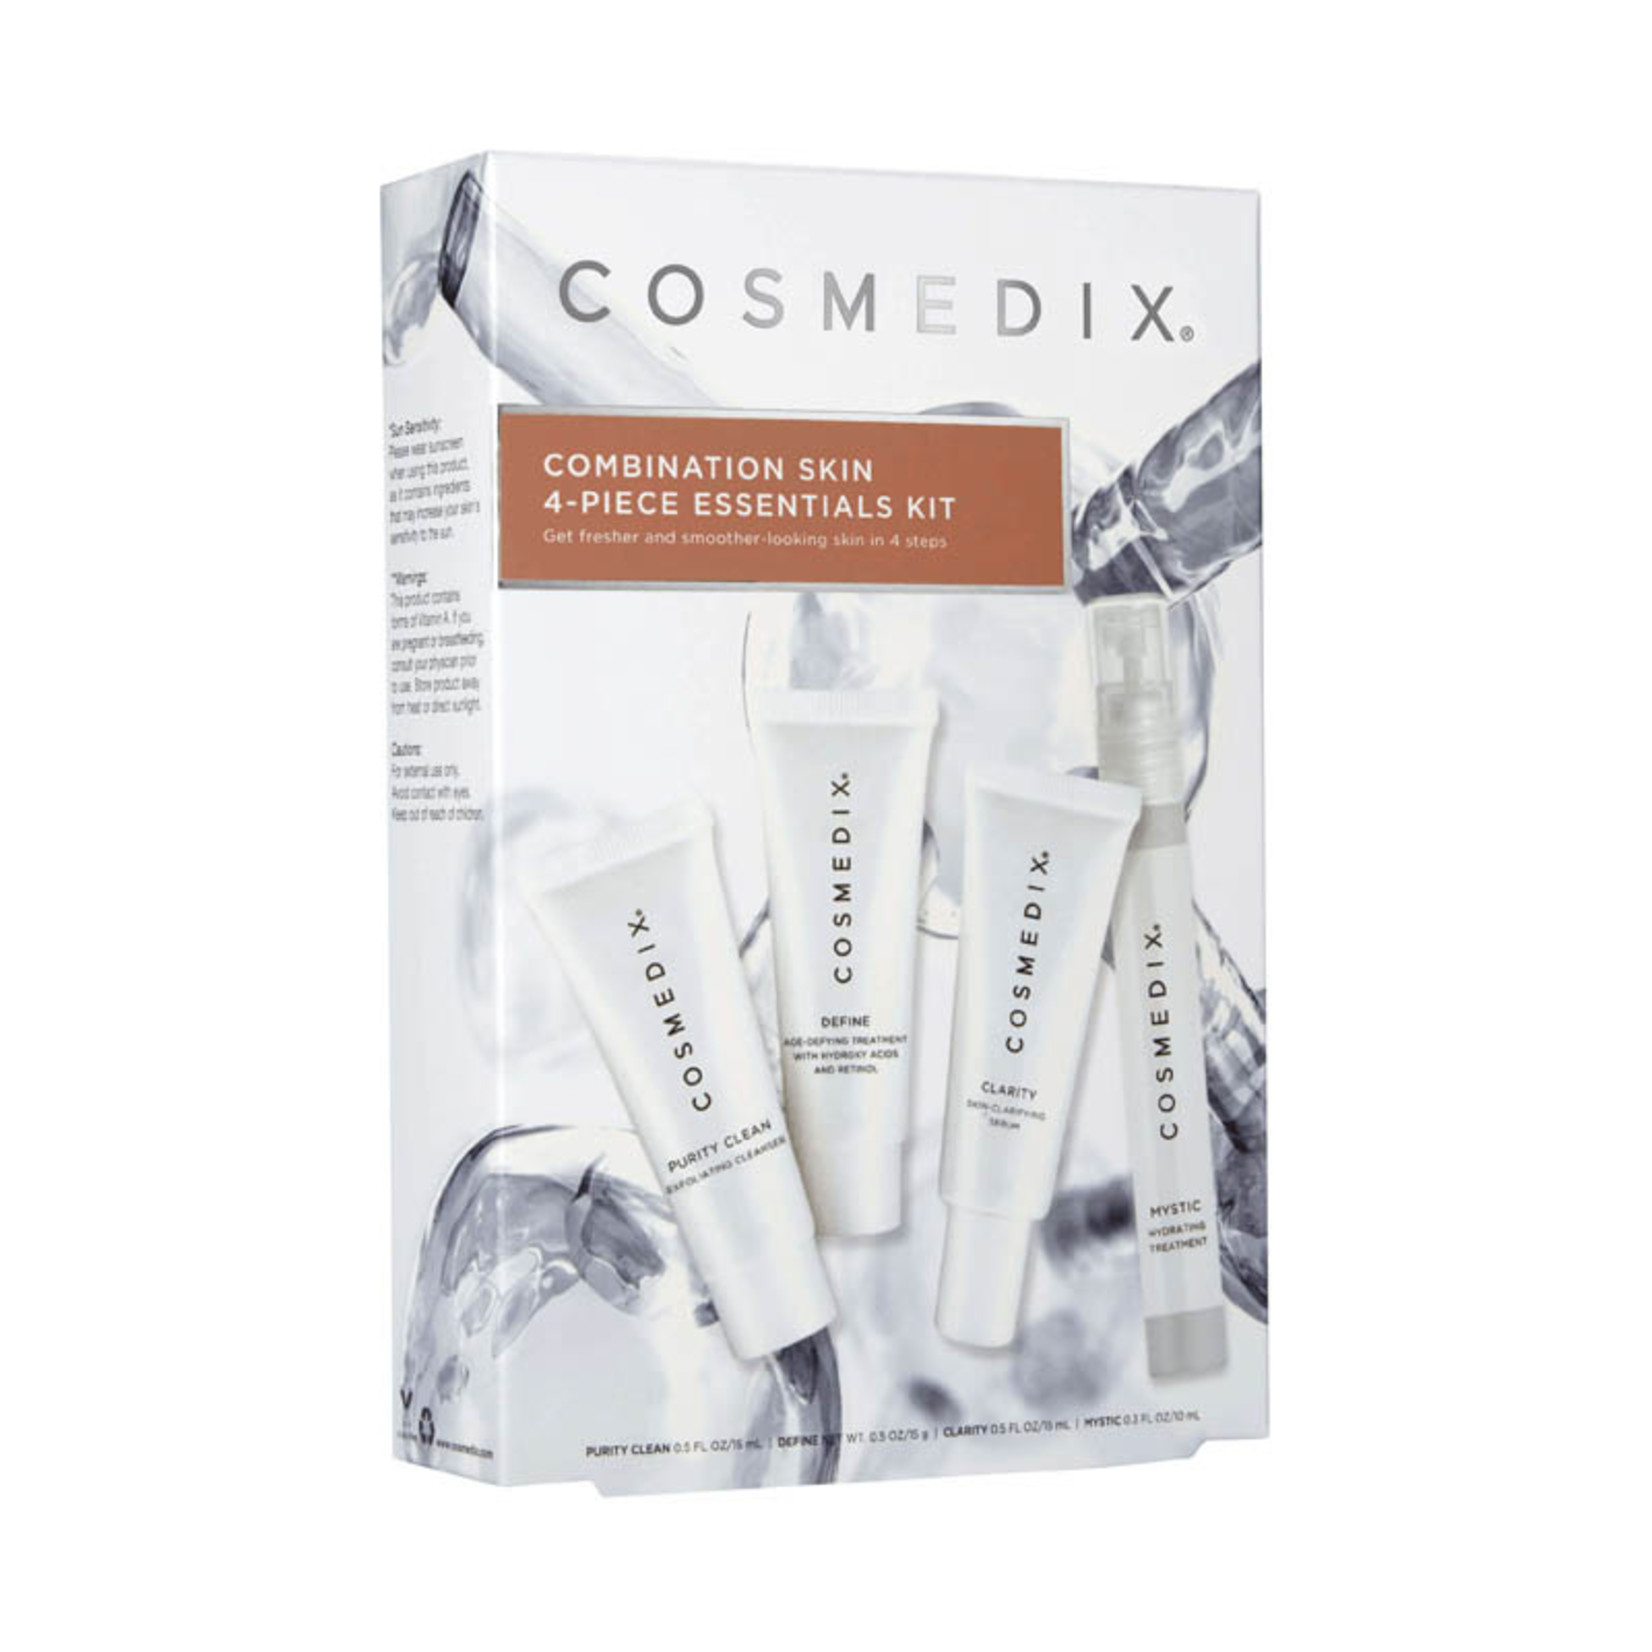 Cosmedix Combination Skin Kit